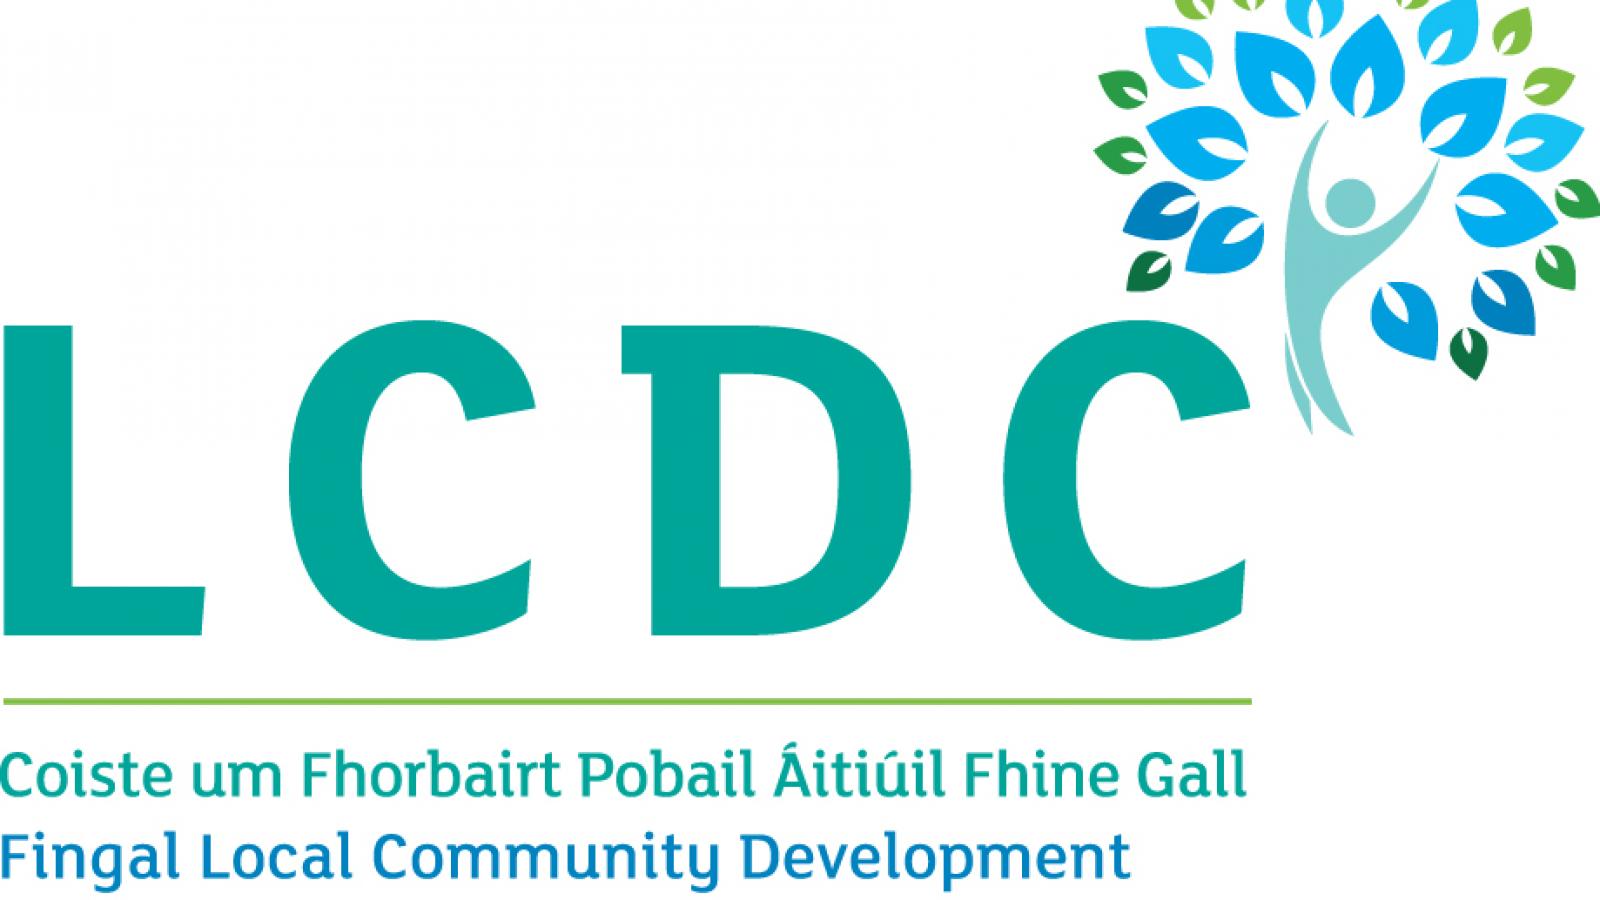 Fingal LCDC Logo